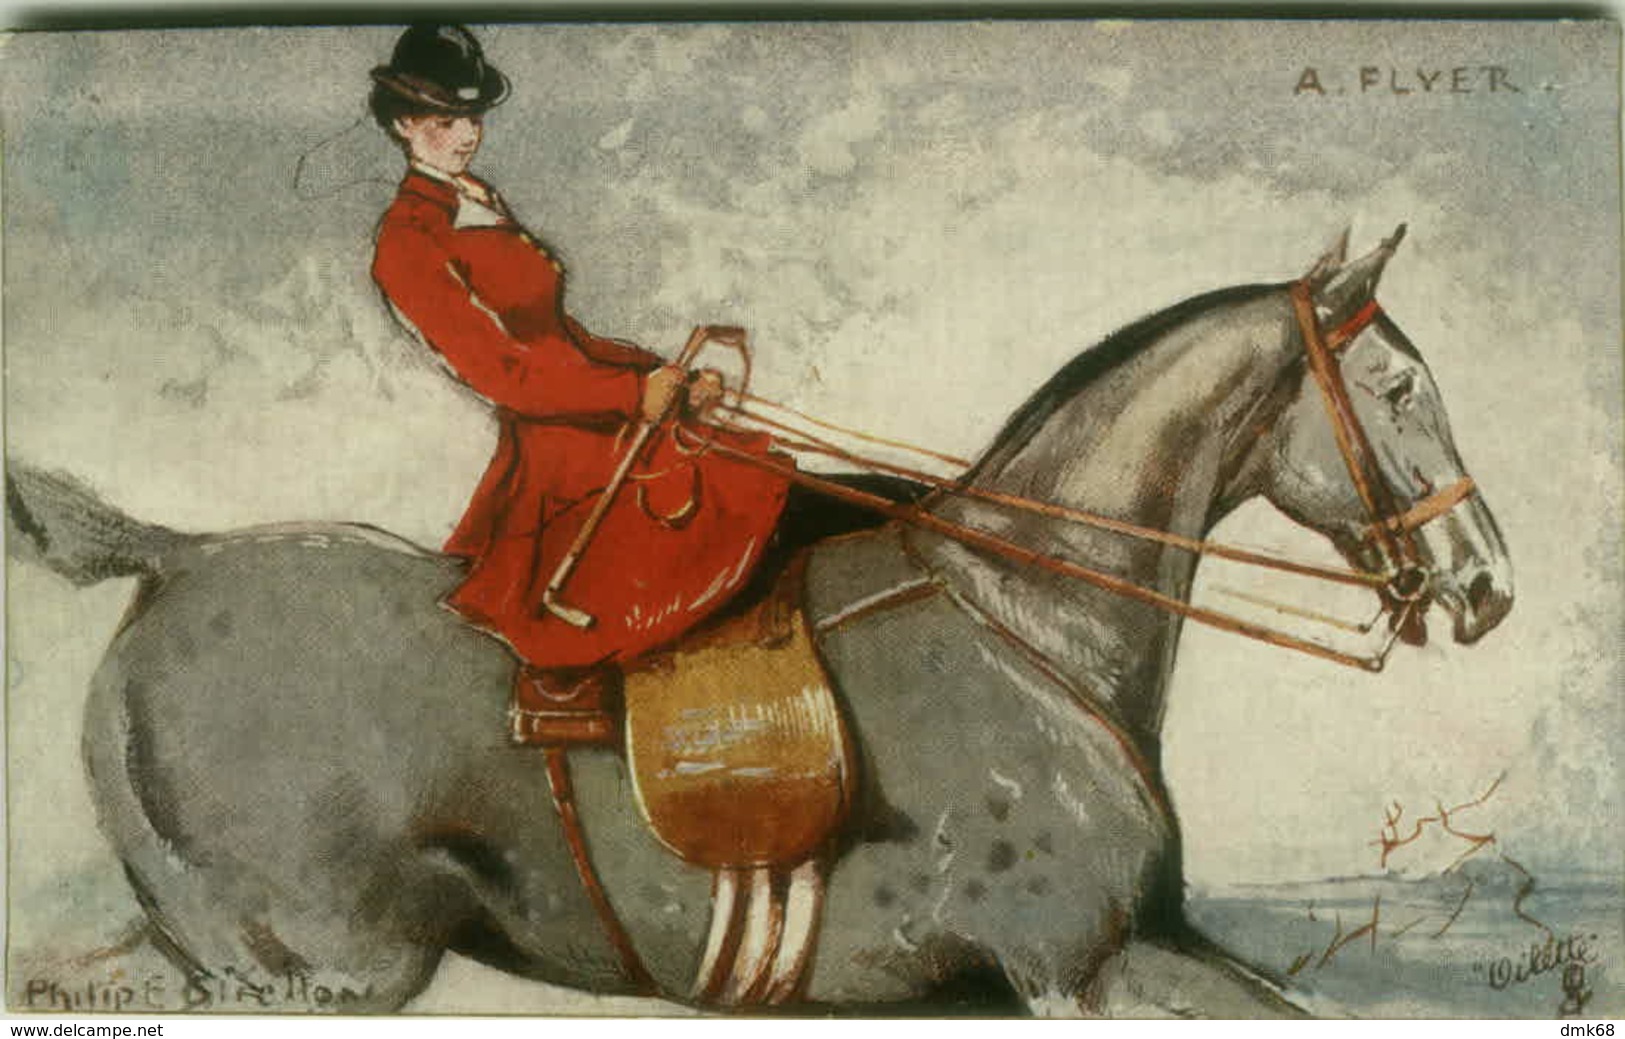 TUCK'S POSTCARD SIGNED PHILIP E. STRETTON - HORSE - HUNTING FOX - A. FLYER. N. 2765 (BG424) - Tuck, Raphael